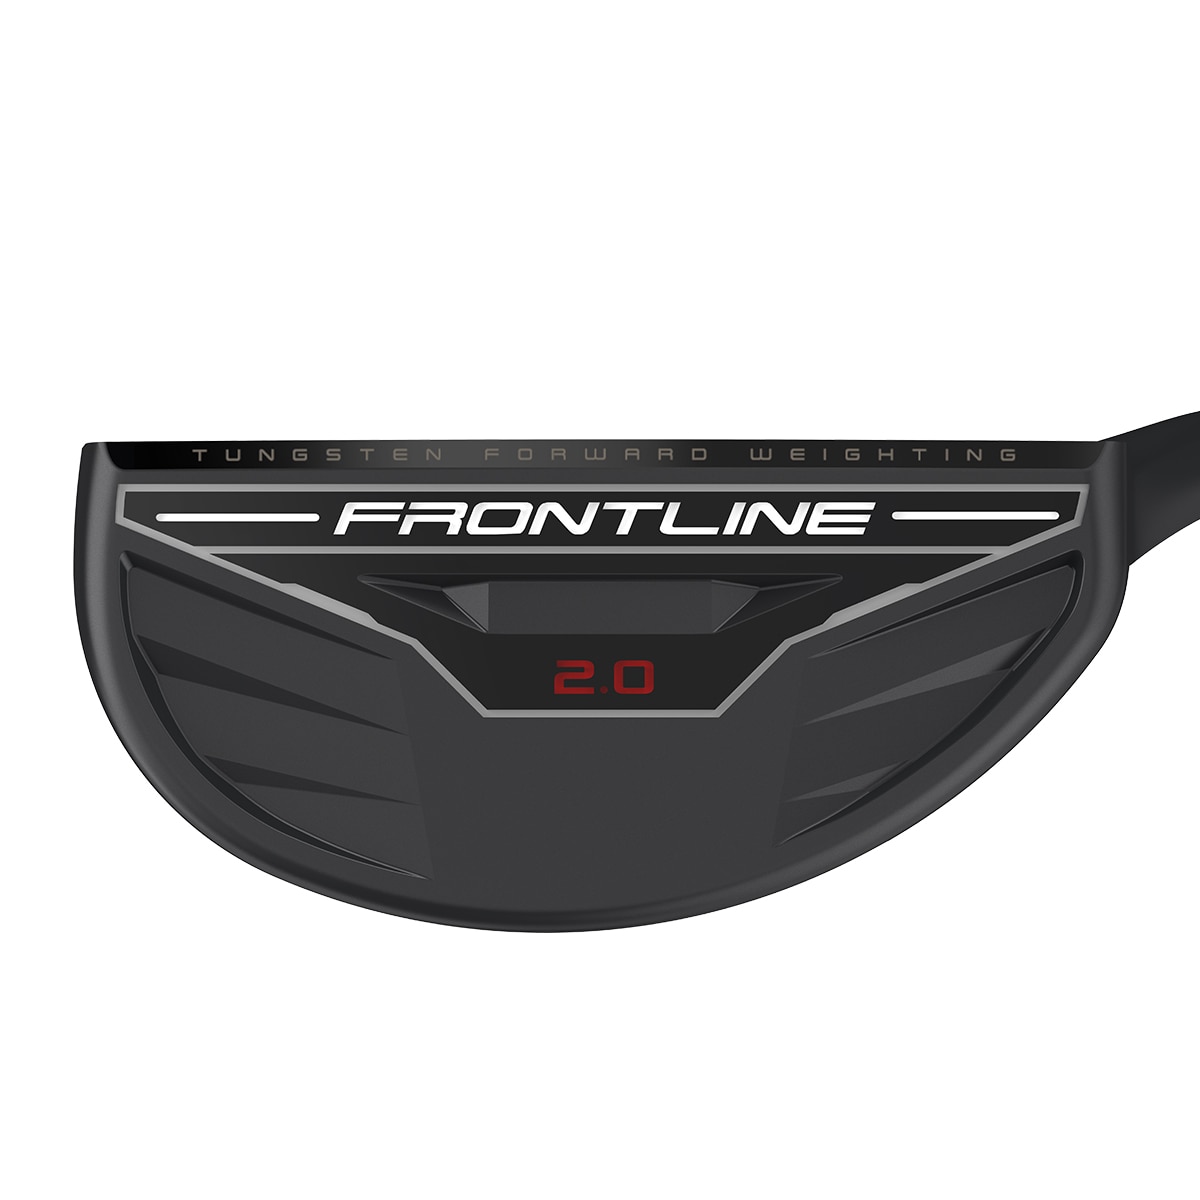 FRONTLINE 2.0 パター(パター（単品）)|Cleveland Golf(クリーブランド ...